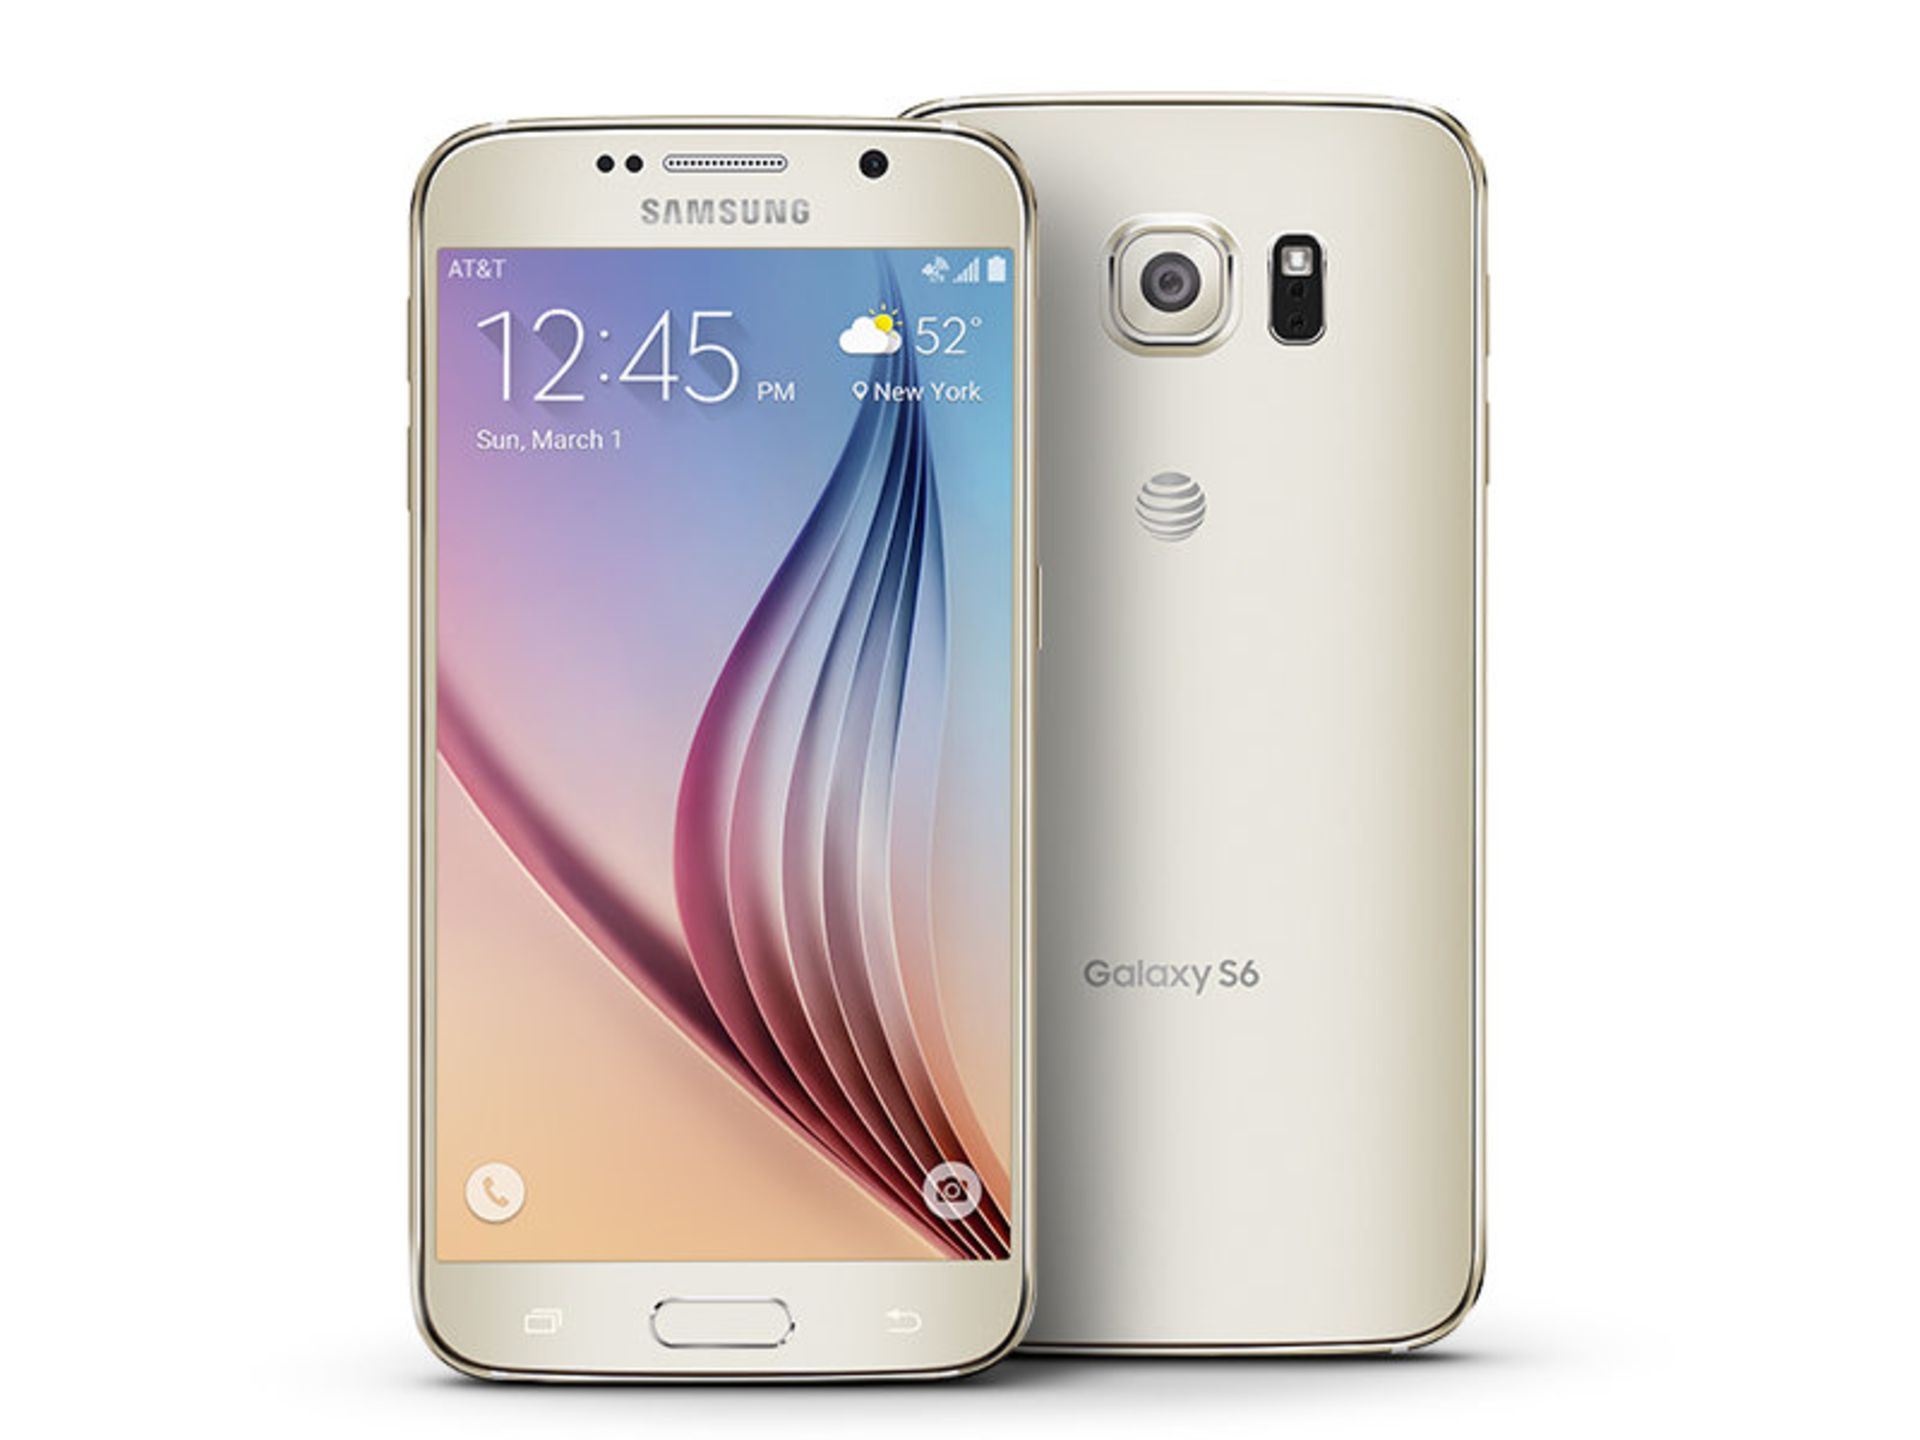 *TRADE QTY* Grade A Samsung Galaxy S6 Phone - 16MP Camera - 5.1" Screen - Boxed - Colours May Vary